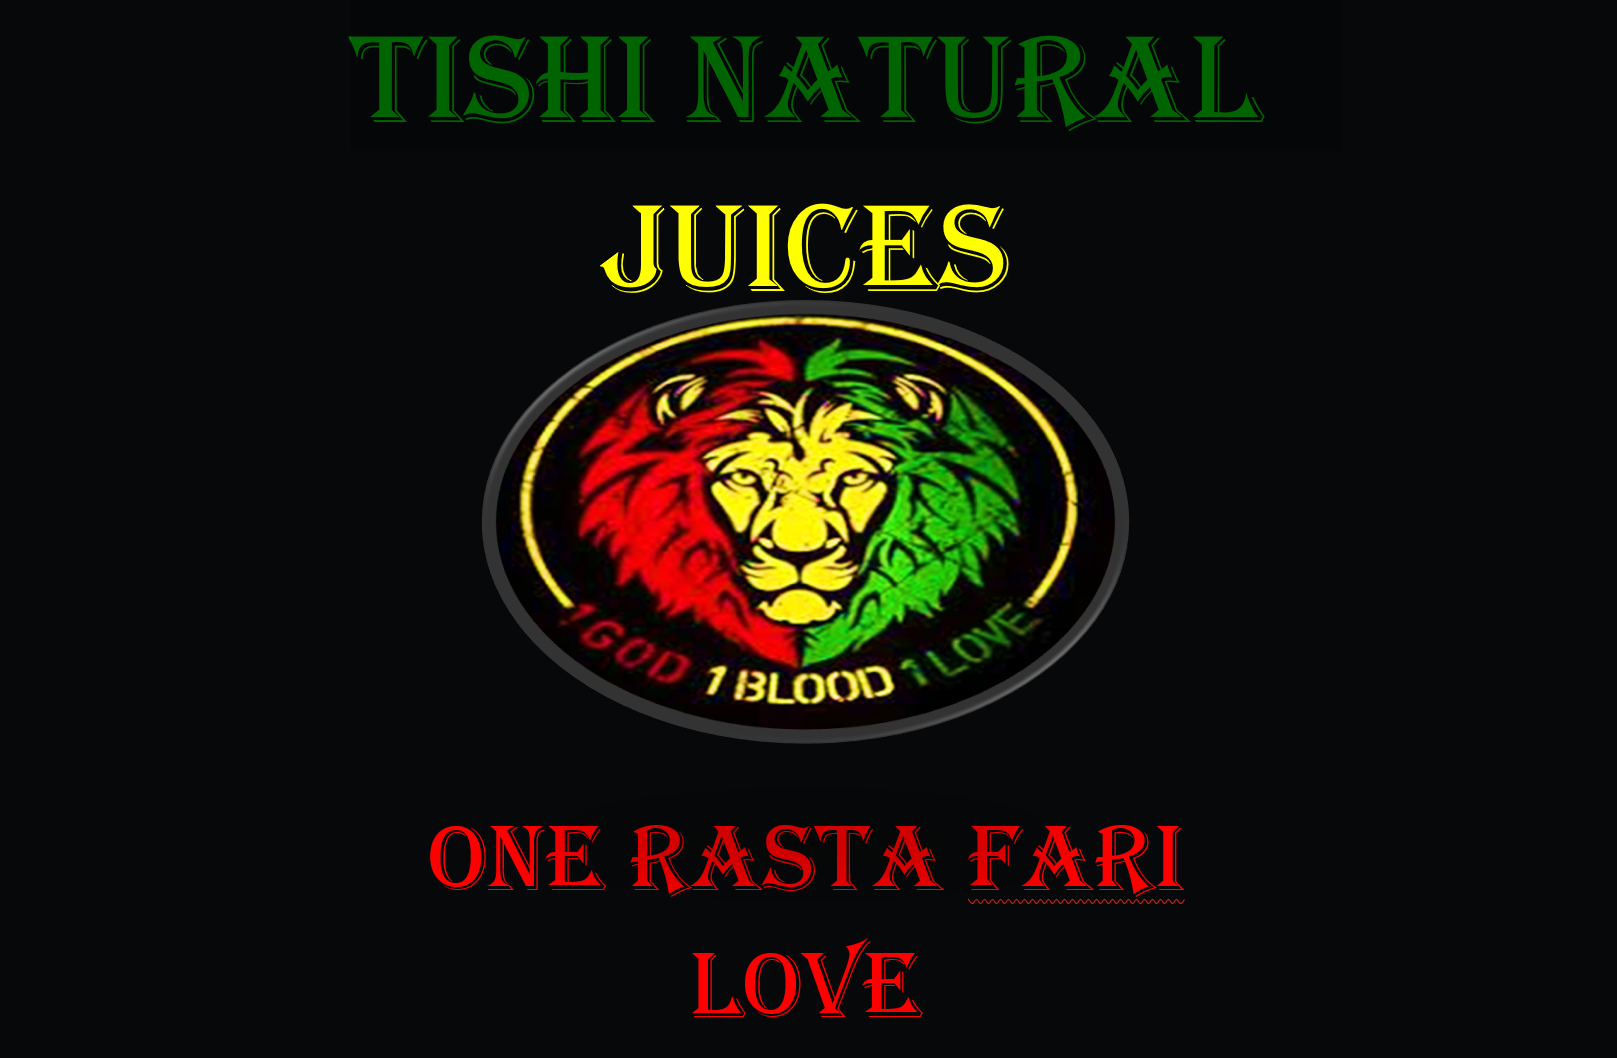 Tishi Natural Juices